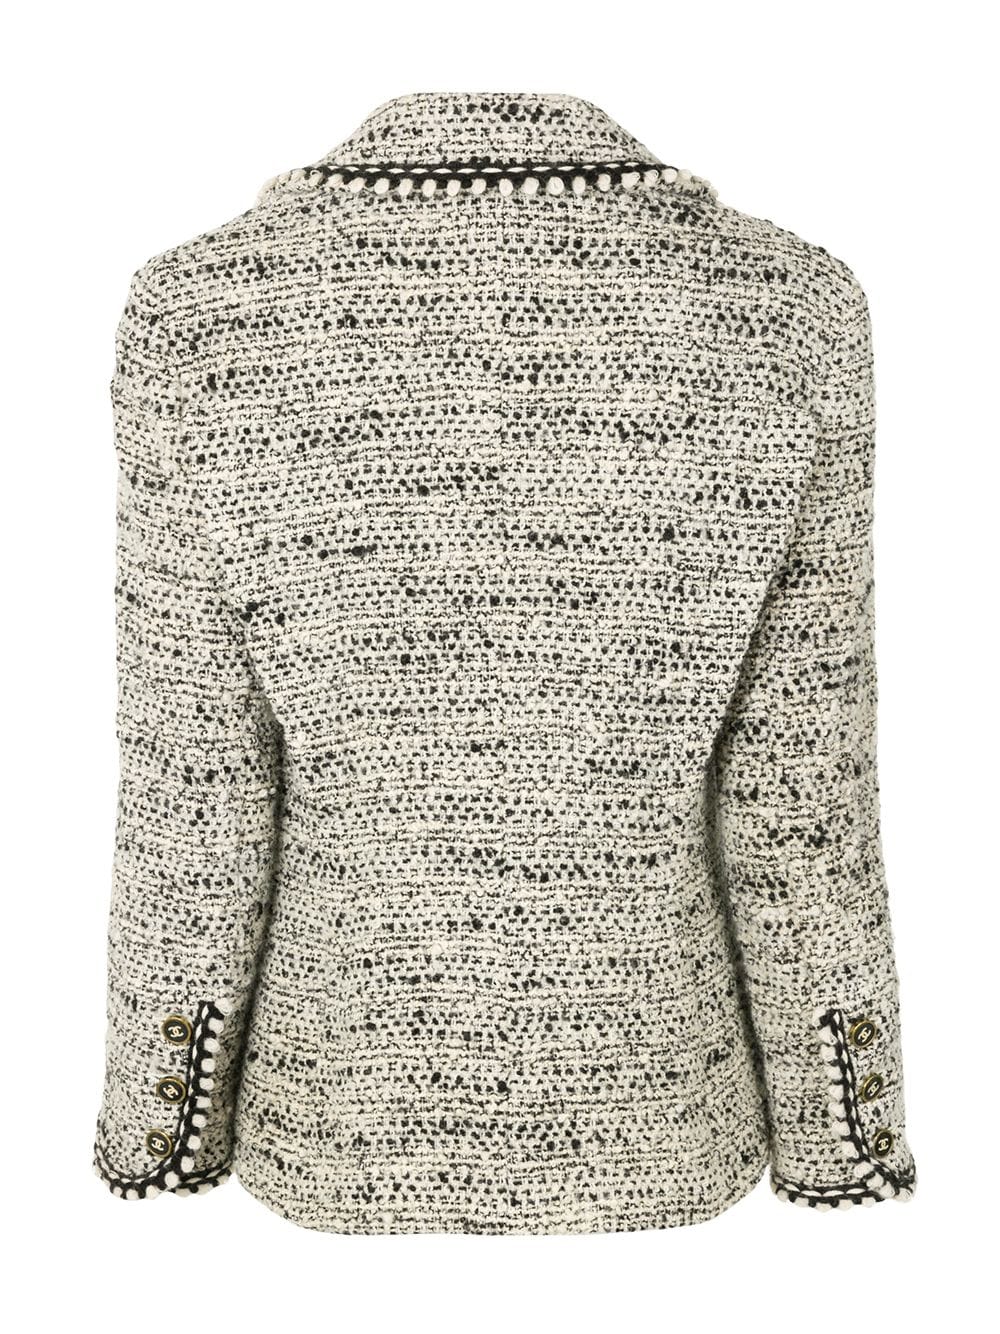 Vintage Chanel Jacket in White Tweed with Black trim (1993) — singulié